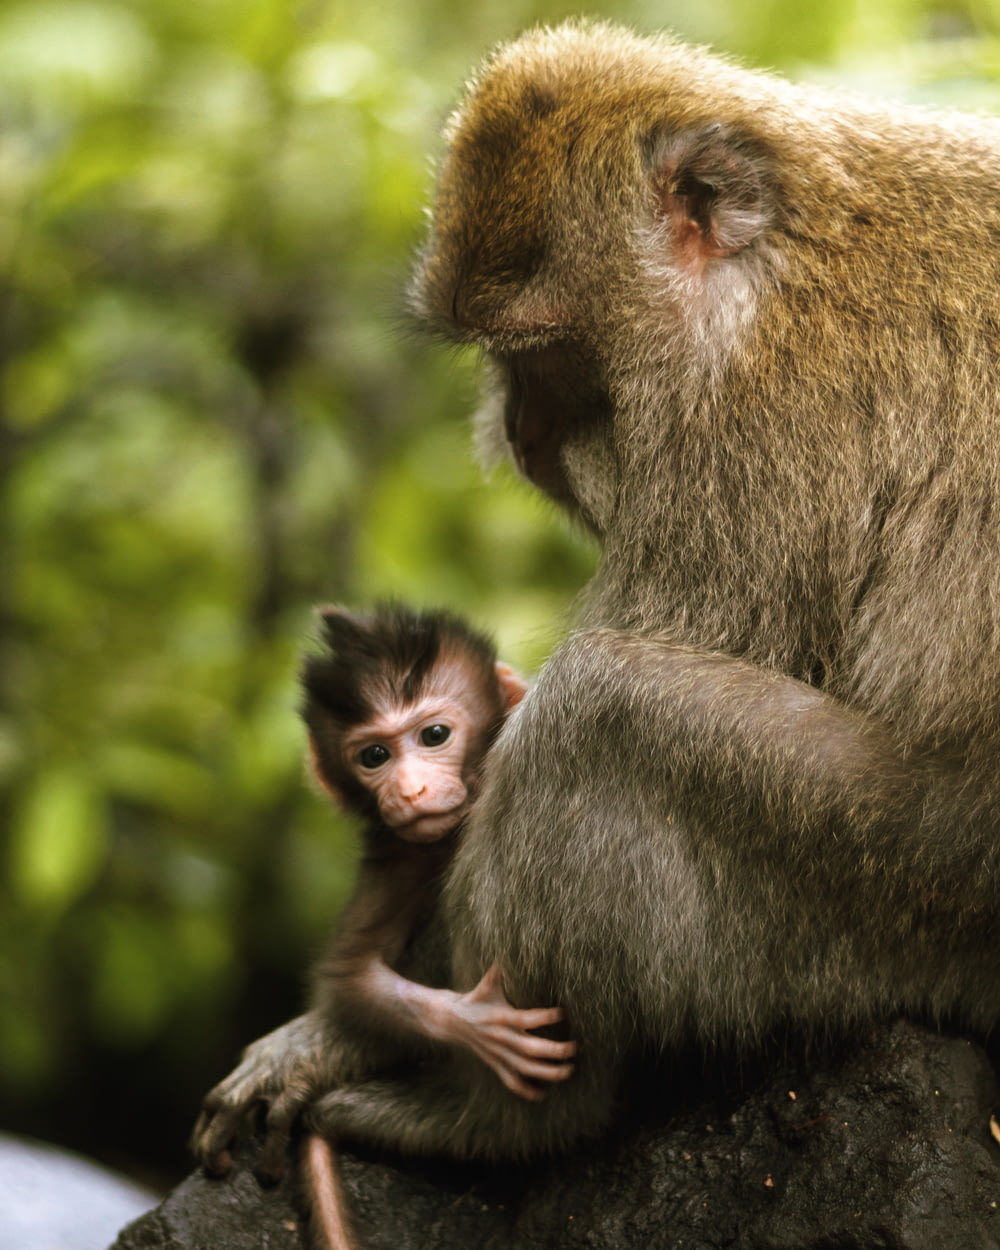 gray monkey carrying baby monkey during daytime